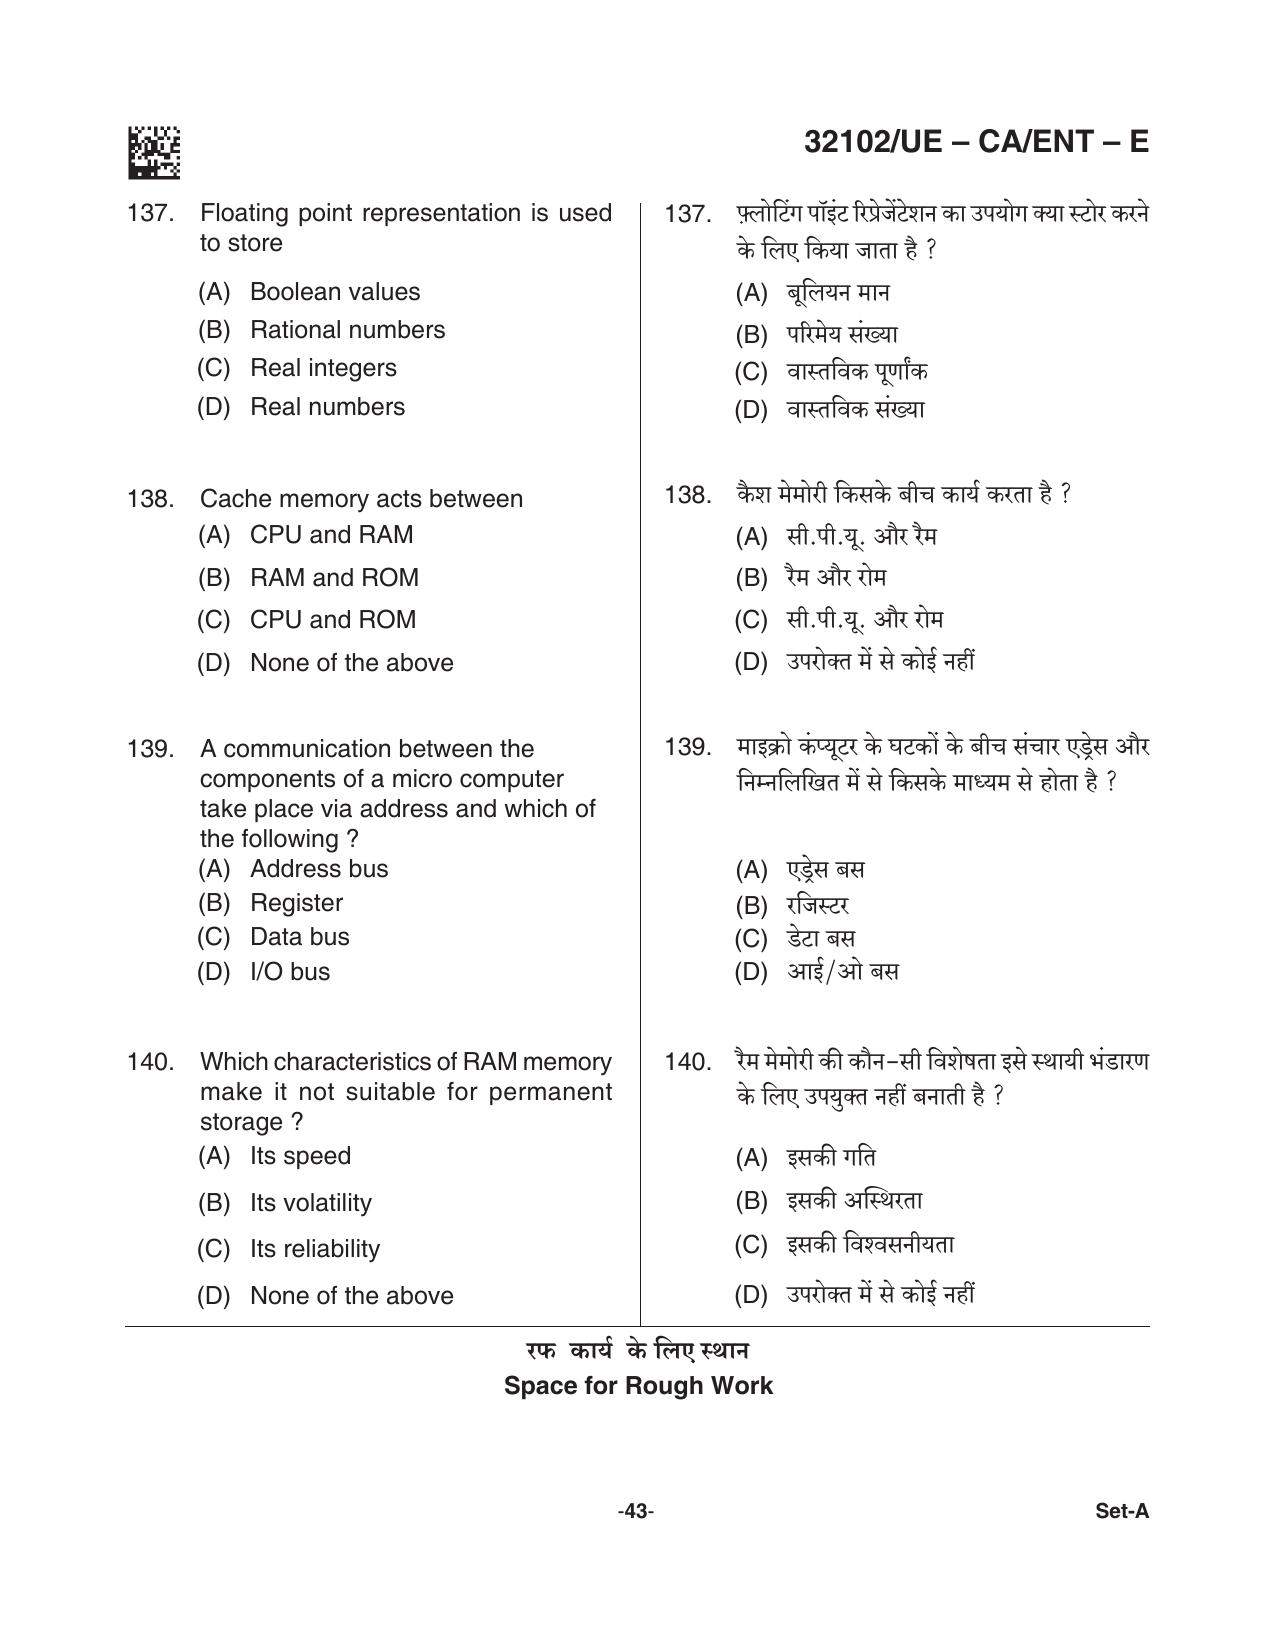 CG Pre MCA 2021 Question Paper - Page 43